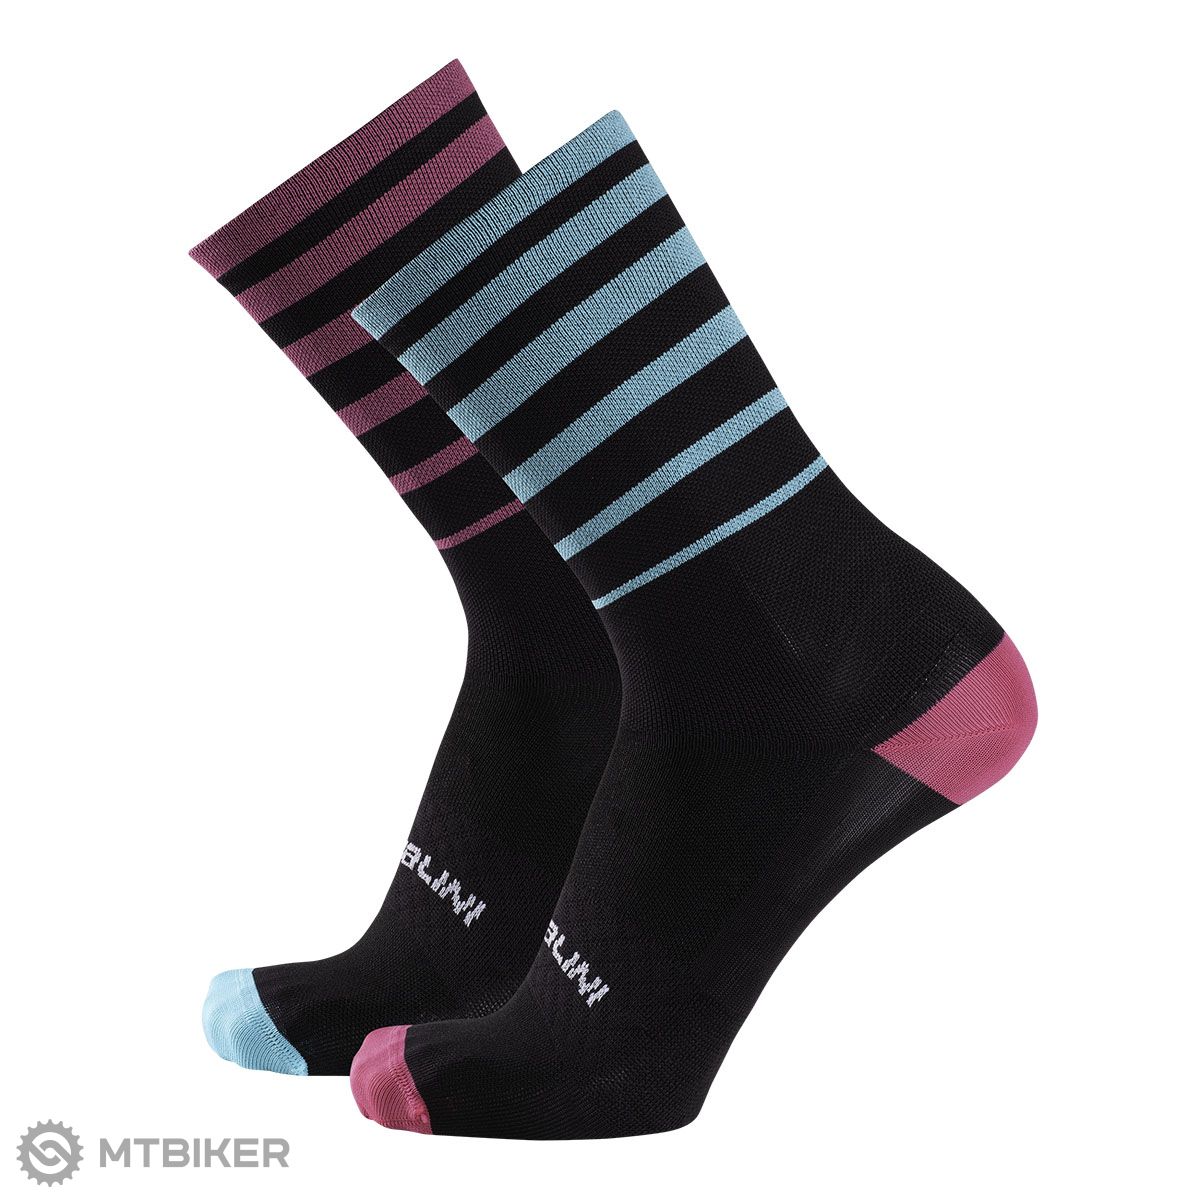 Nalini Gravel Socken, schwarz/blau/lila